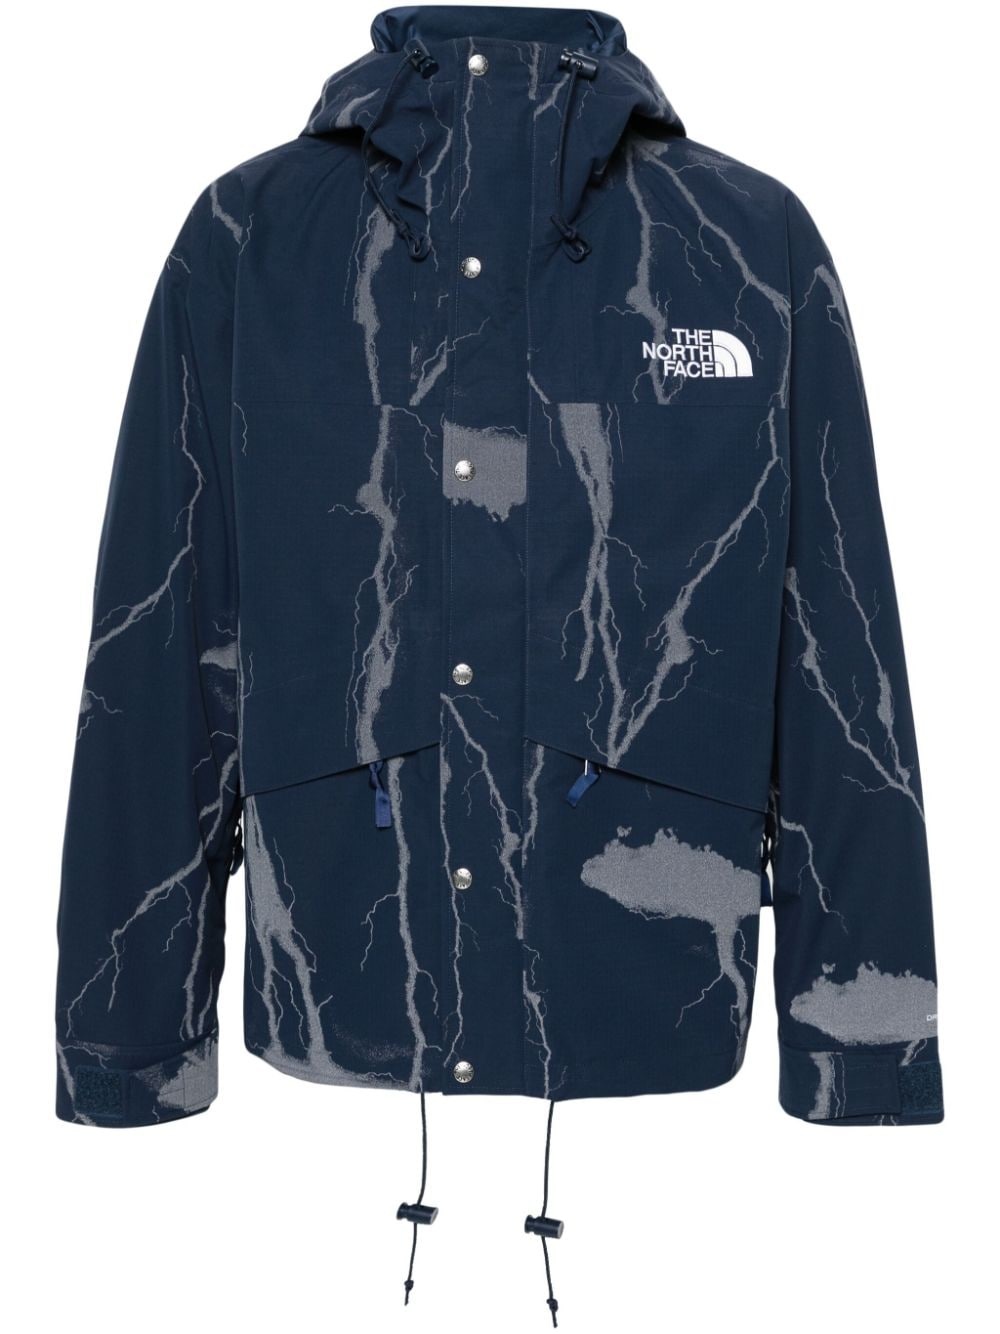 '86 Novelty Mountain hooded jacket - 1